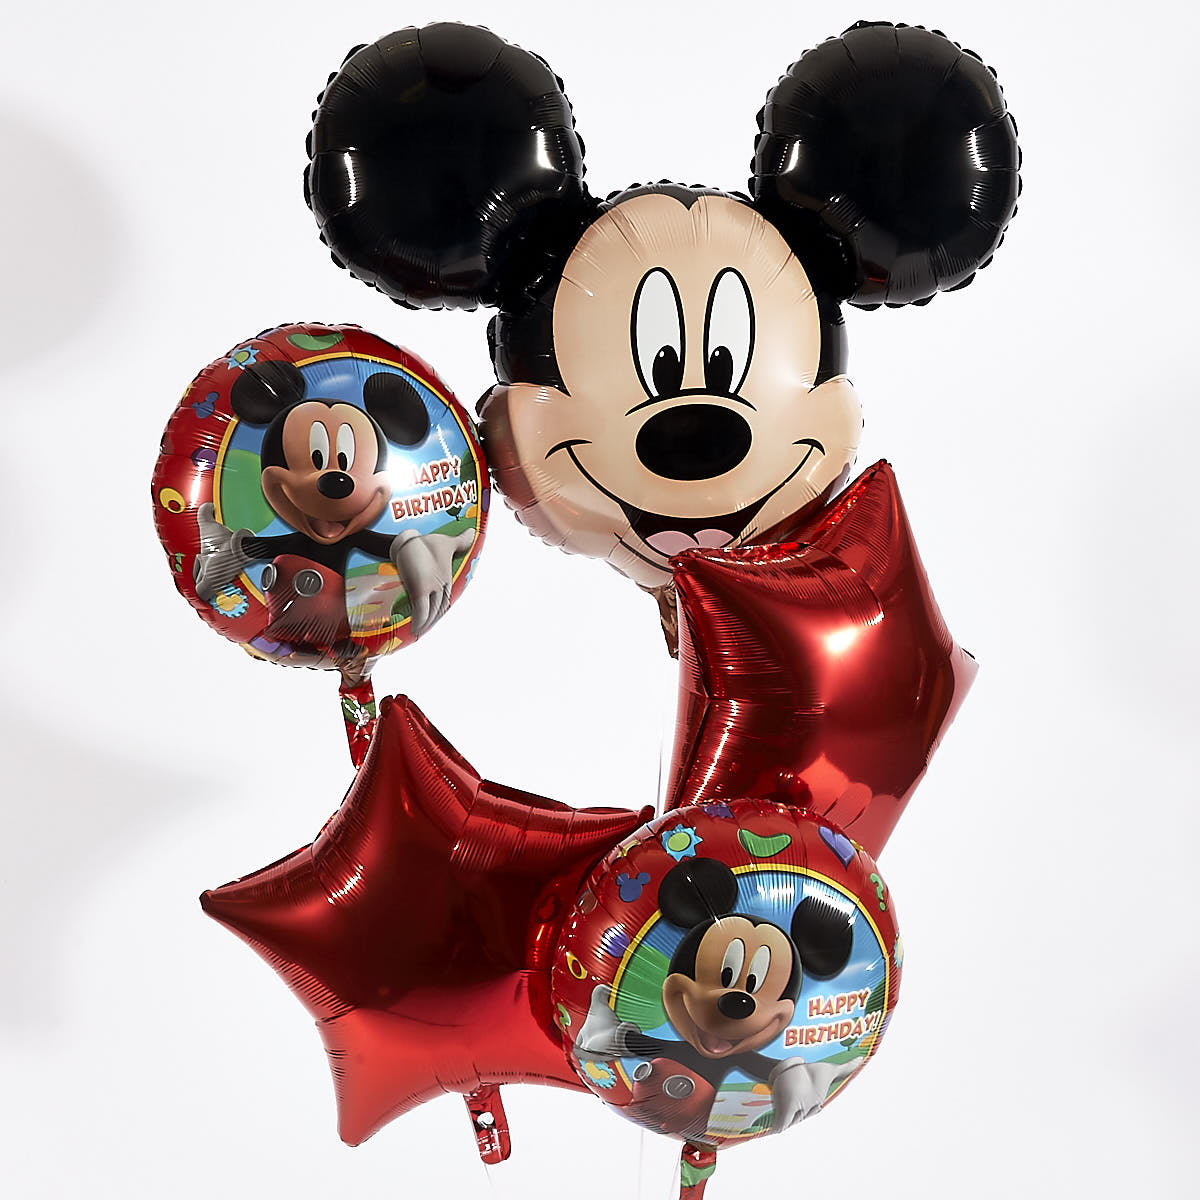 Disney Mickey Mouse Foil Balloon Bouquet